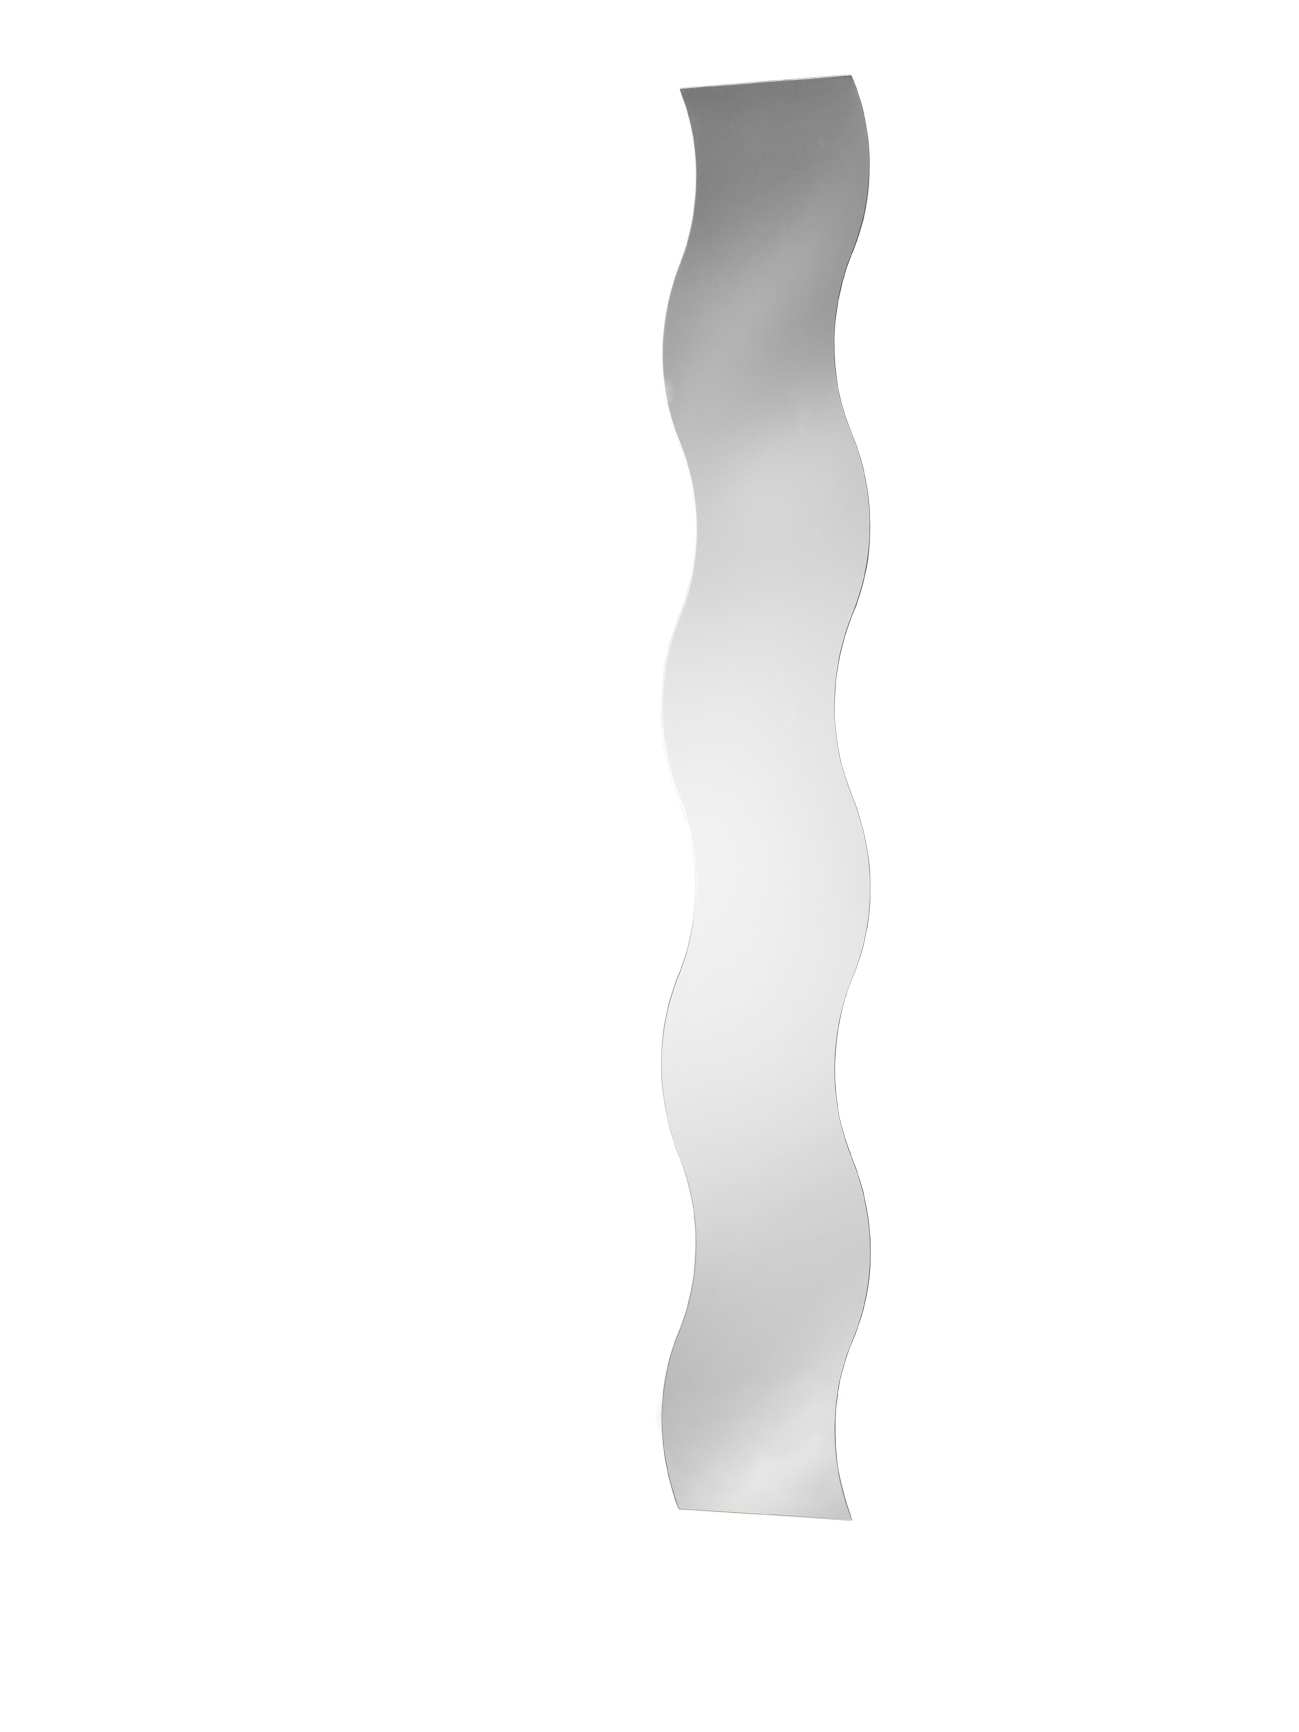 JOKEY Dekospiegel "Kobra" 160 x 24 cm ehem. Imagolux